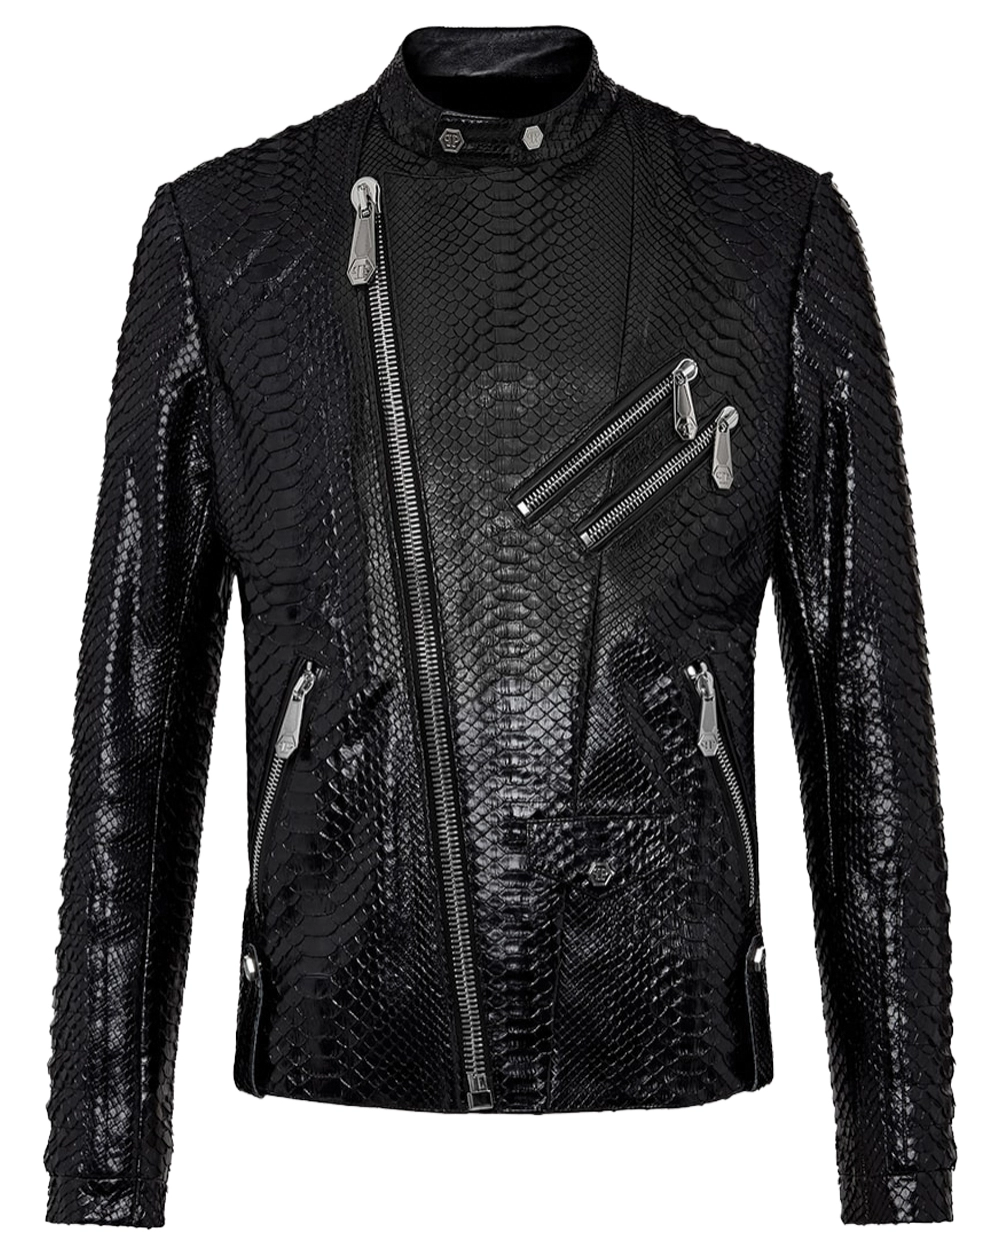 Real leather biker jacket in Black Python affects